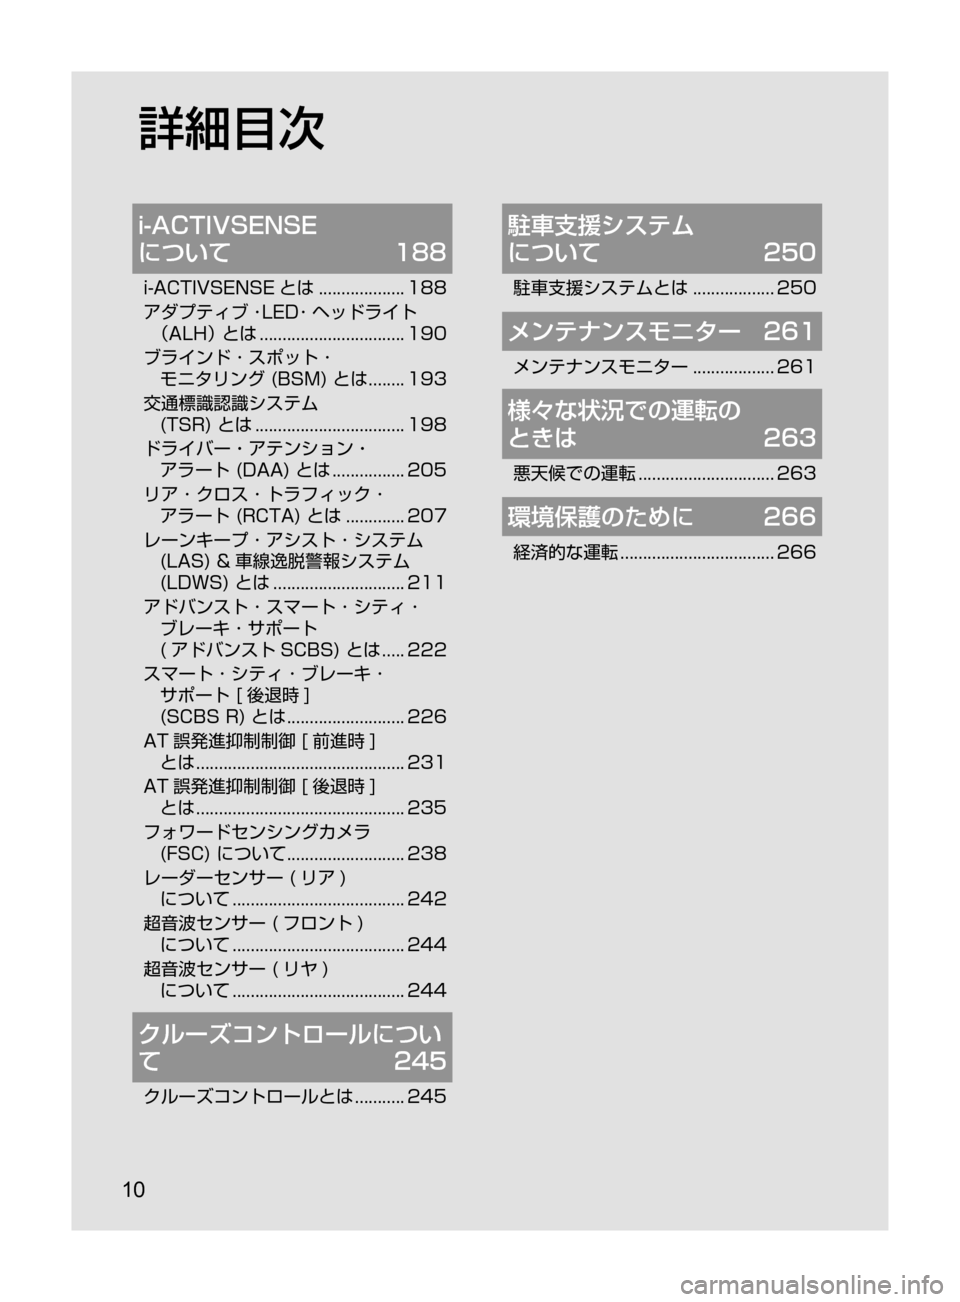 MAZDA MODEL AXELA HYBRID 2016  アクセラハイブリッド｜取扱説明書 (in Japanese) 10
i-ACTIVSENSE	
について	188
i-ACTIVSENSE とは﻿﻿................... 188
アダプティブ ･LED･ ヘッドライト
（ALH）
﻿﻿

とは ﻿﻿
................................ 190
